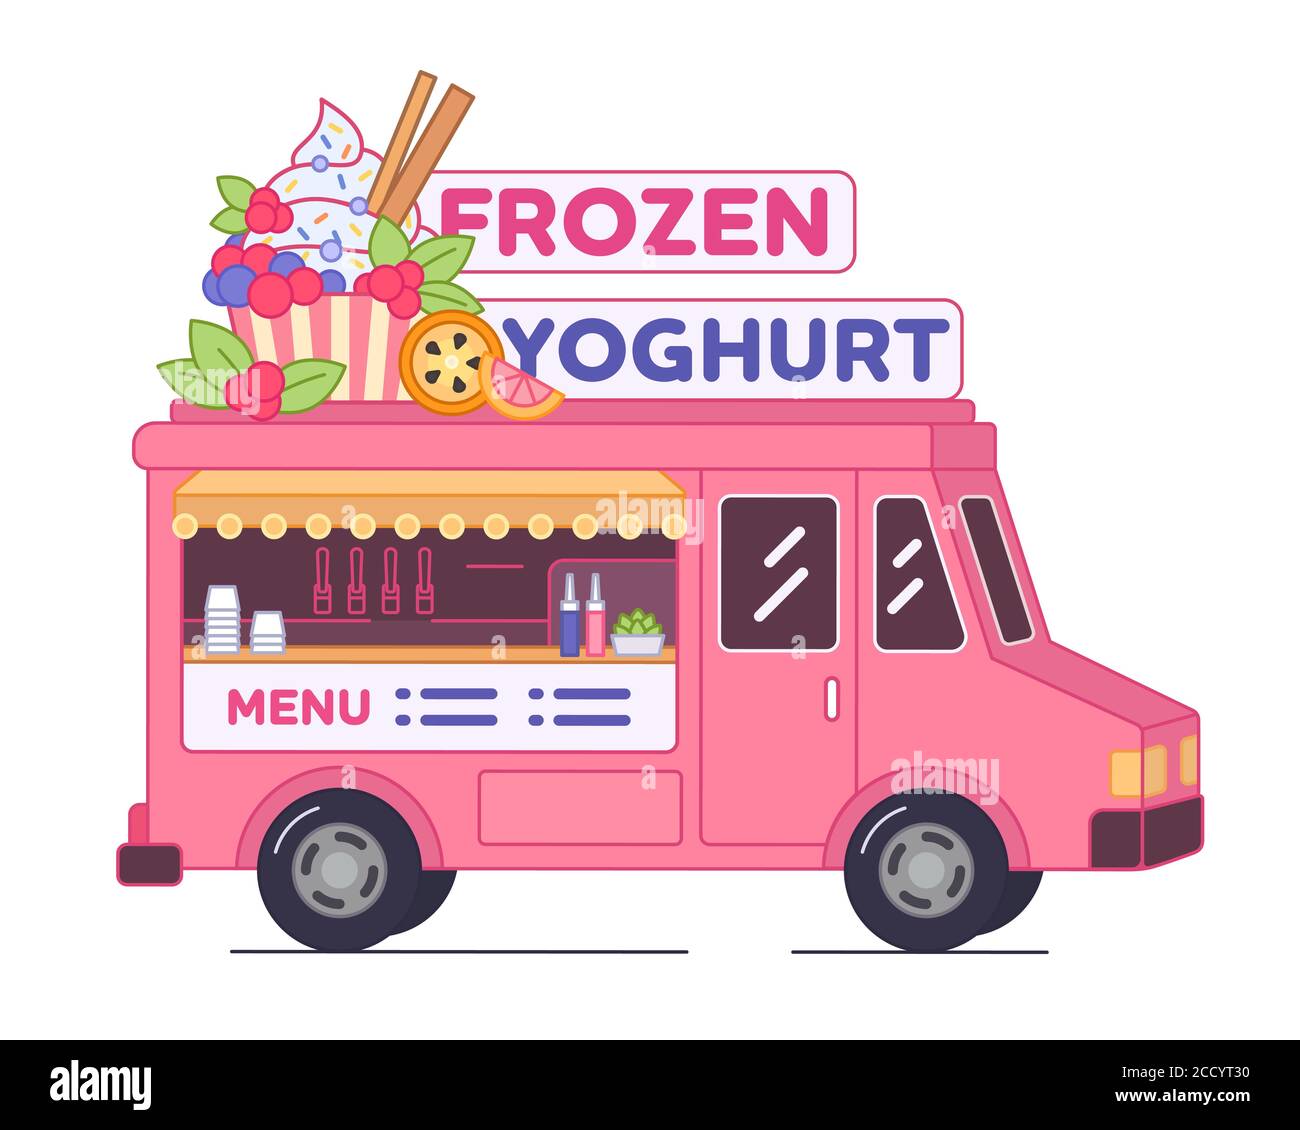 Frozen yoghurt van bar - isolated illustration. Pink street food truck of yogurt ice cream. Mobile bar of low calorie desserts in car Stock Vector